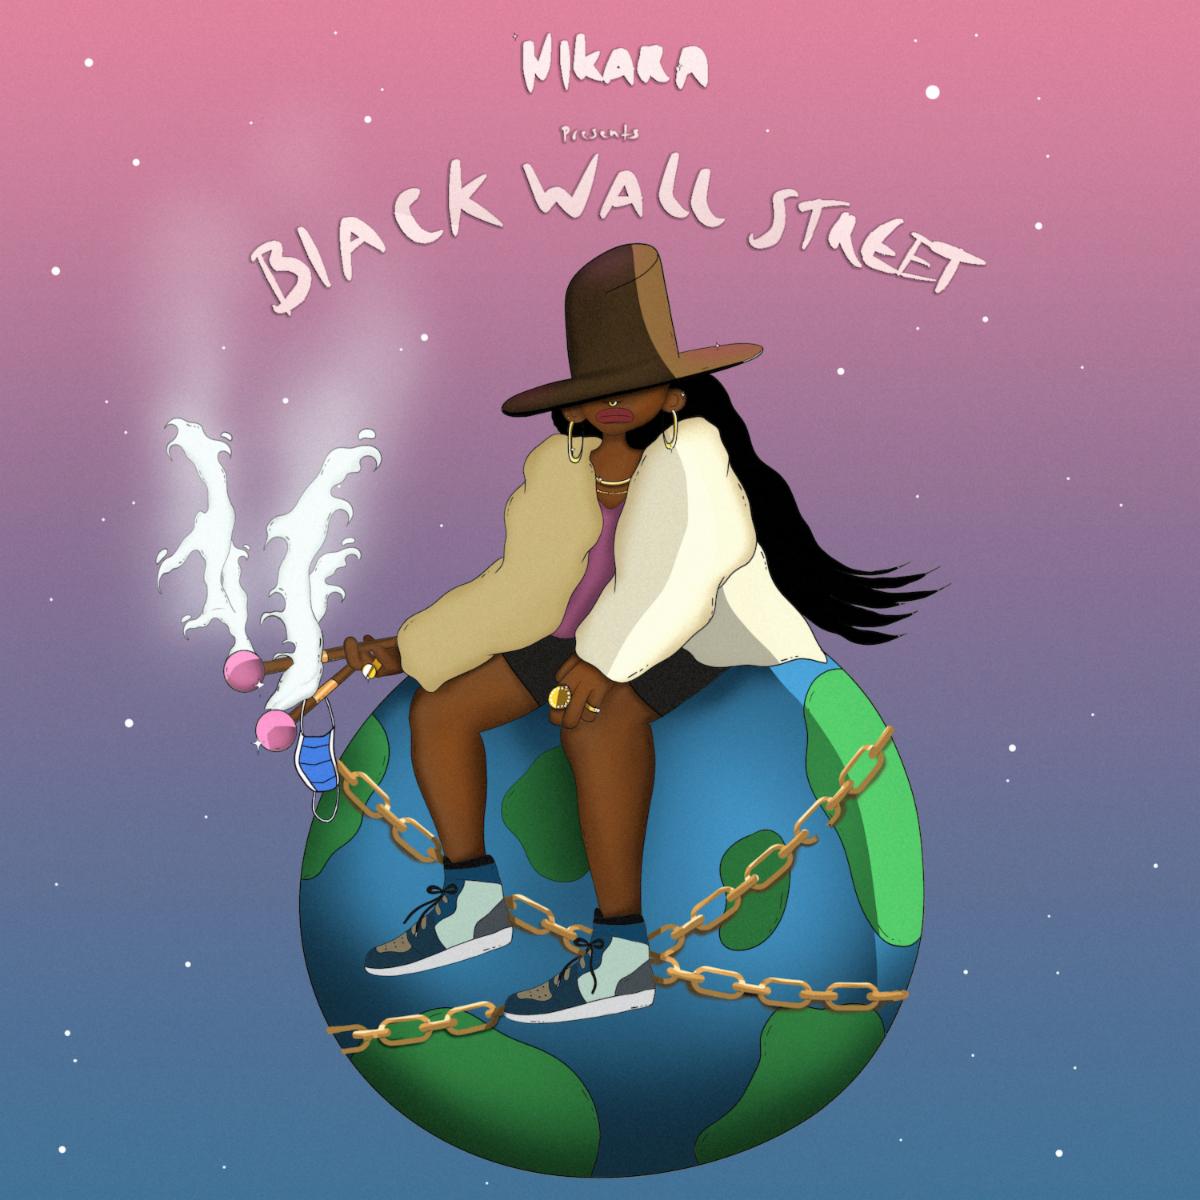 NIKARA WARREN - Black Wall Street cover 